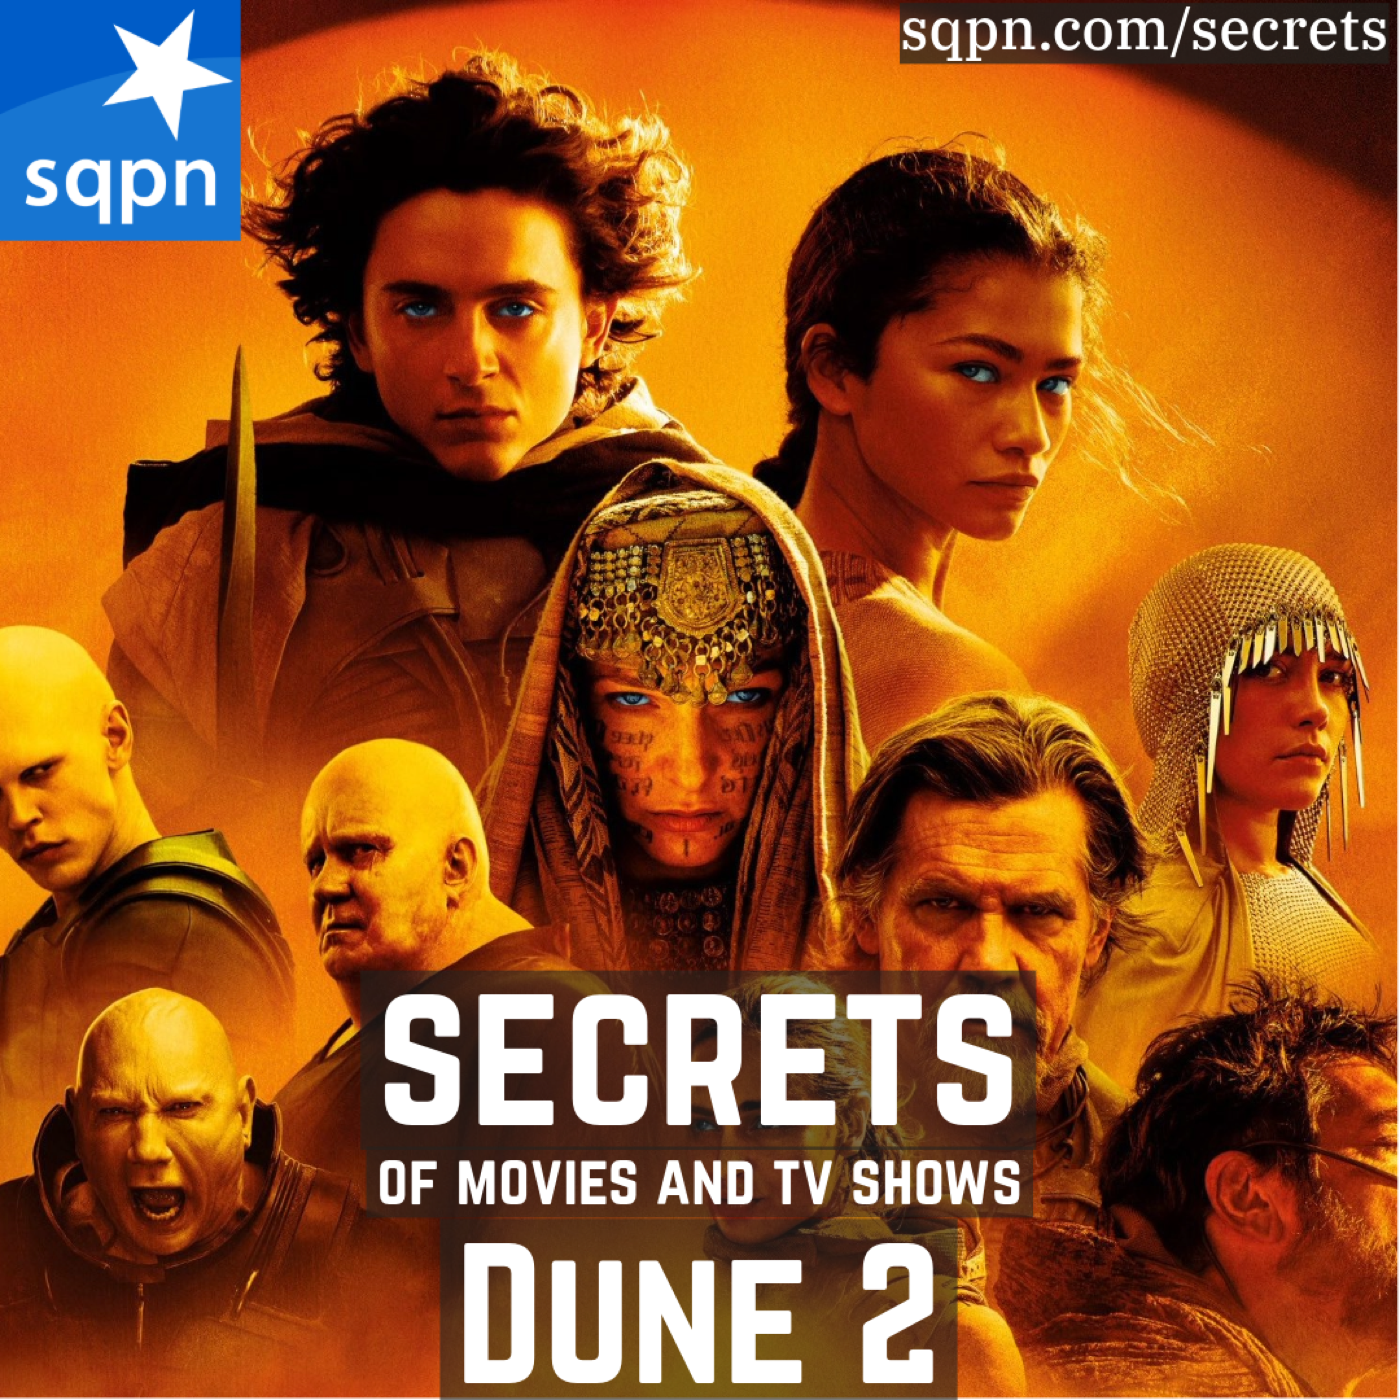 The Secrets of Dune 2